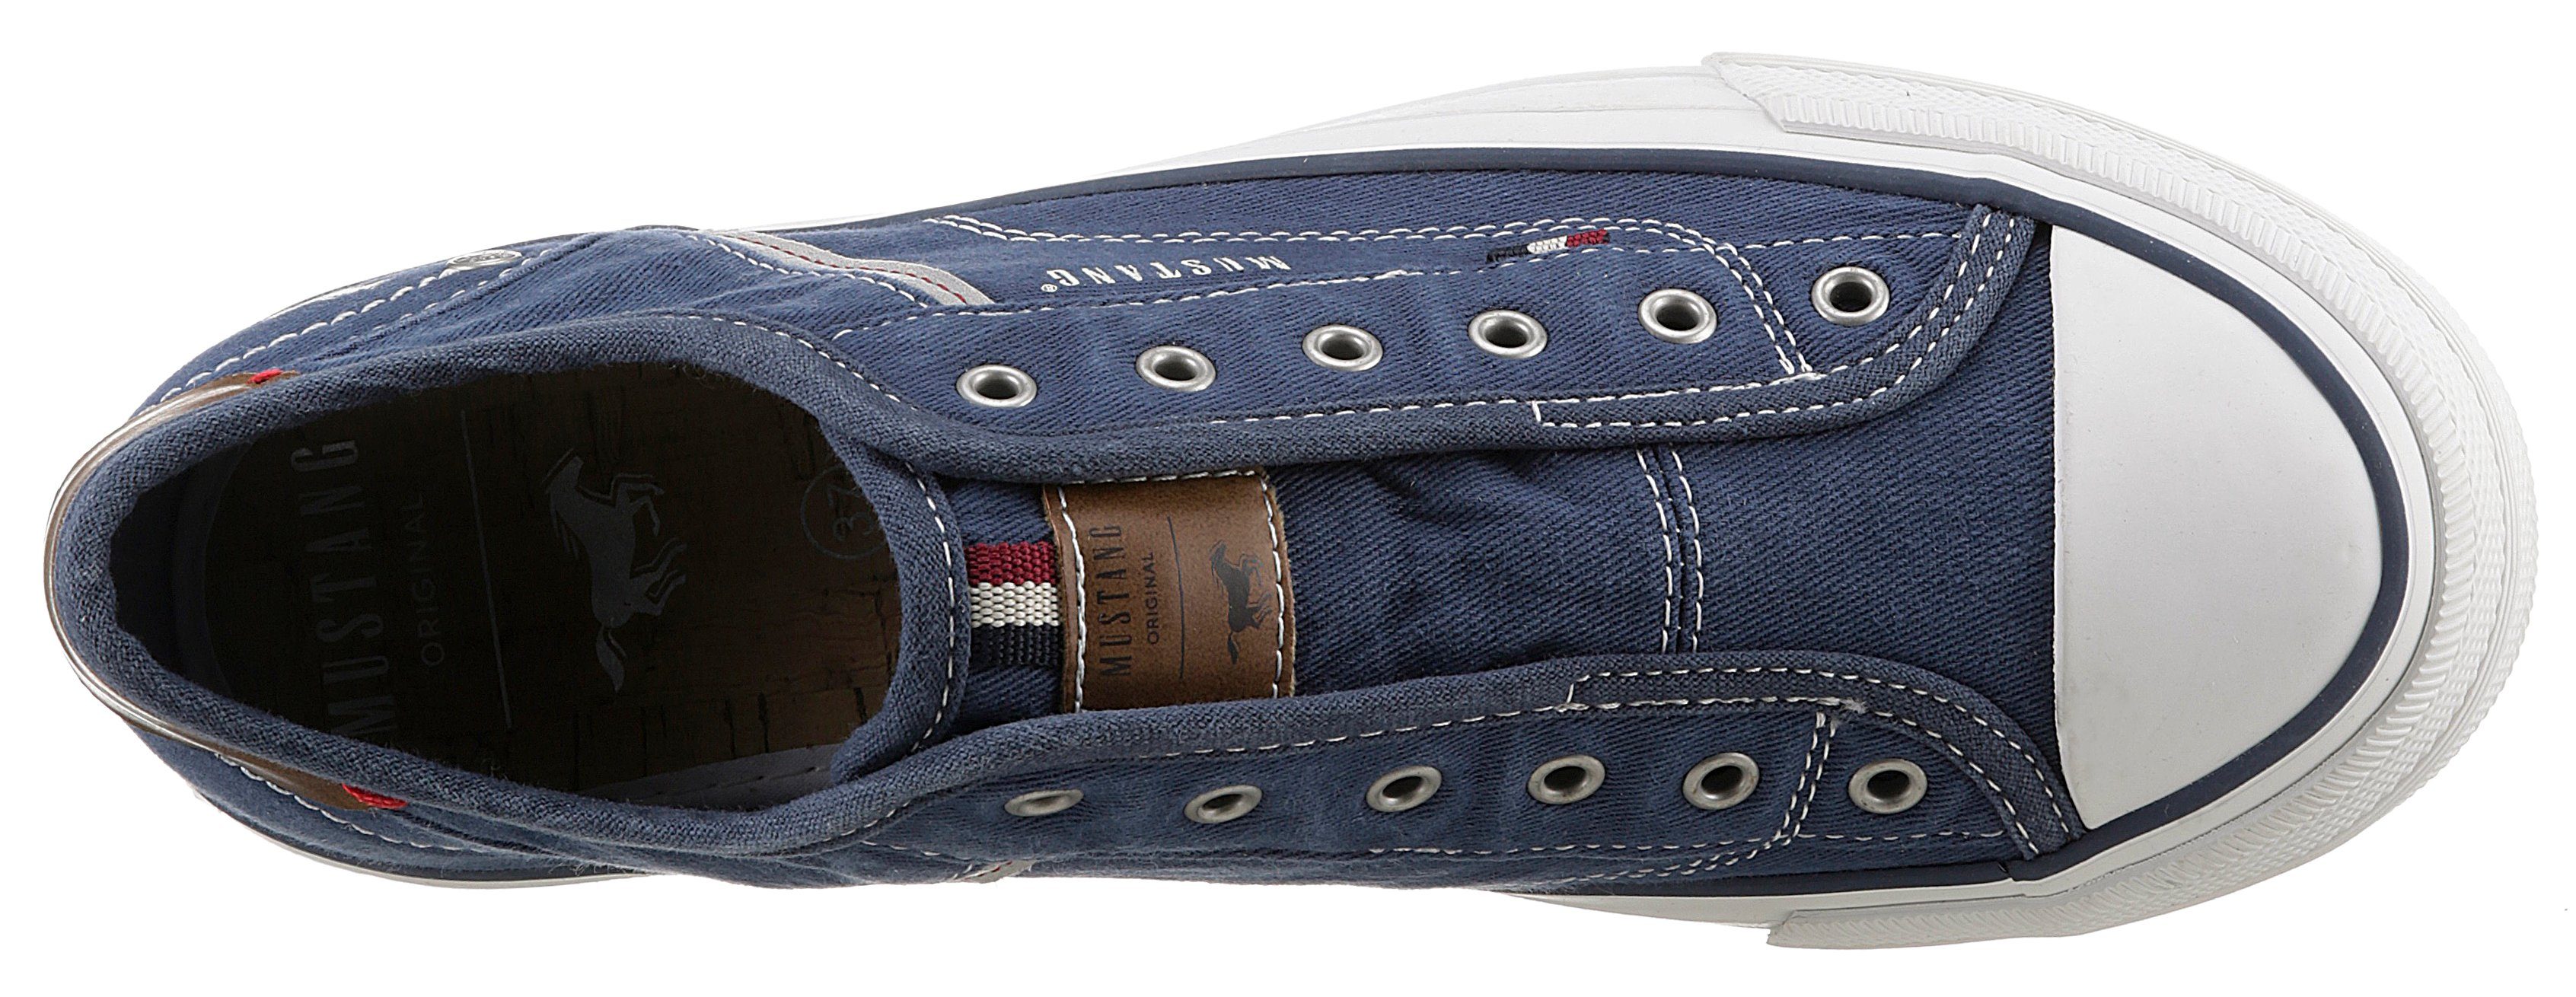 Mustang Shoes Slip-On Sneaker Gummizug mit praktischem dunkelblau